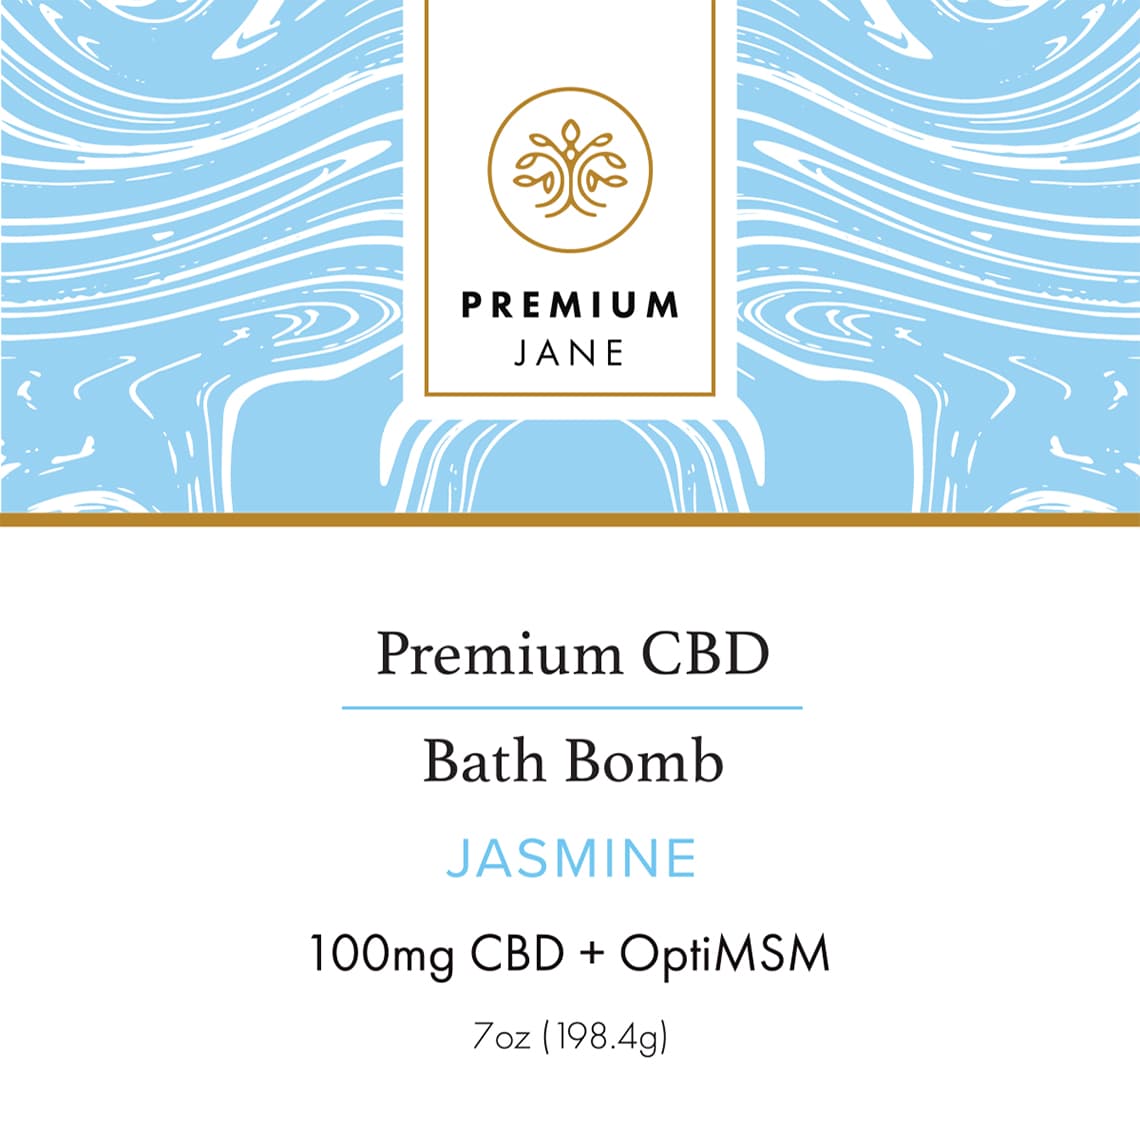 pj-labels-bath bombs-jasmine-1